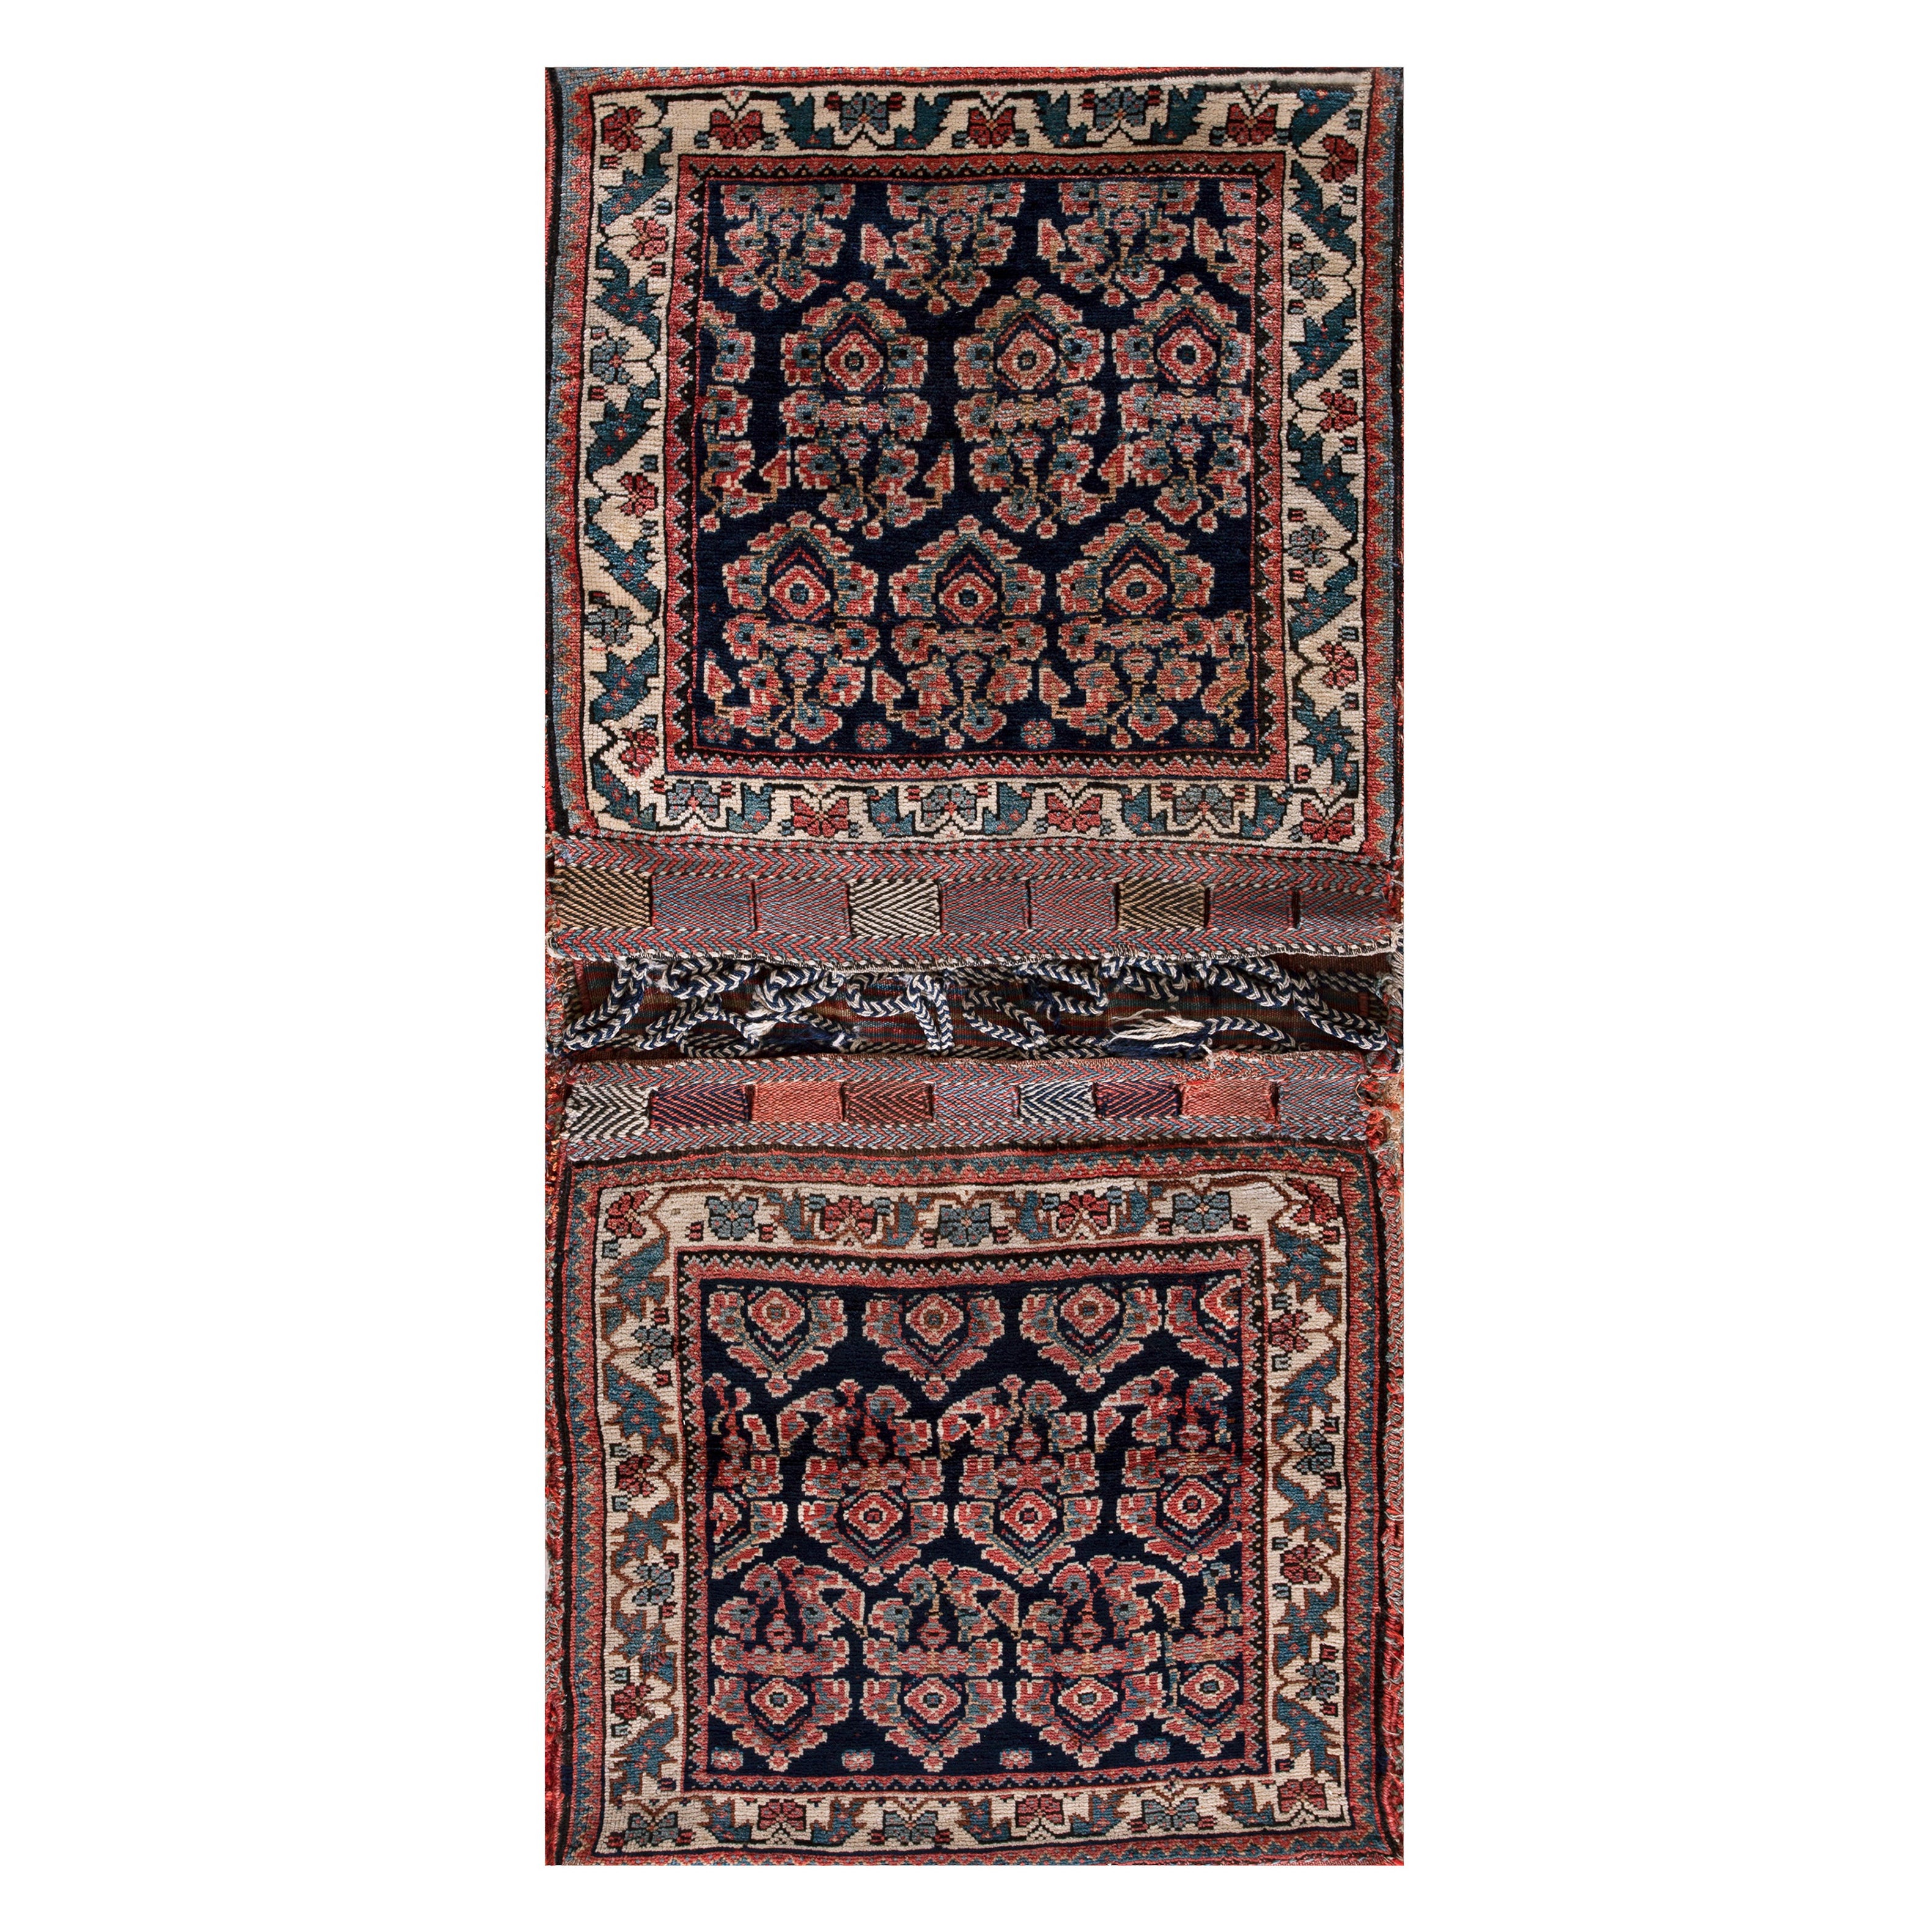 Late 19th Century S. Persian Afshar Saddle Bag Carpet ( 2' x 4'2" - 61 x 127 )